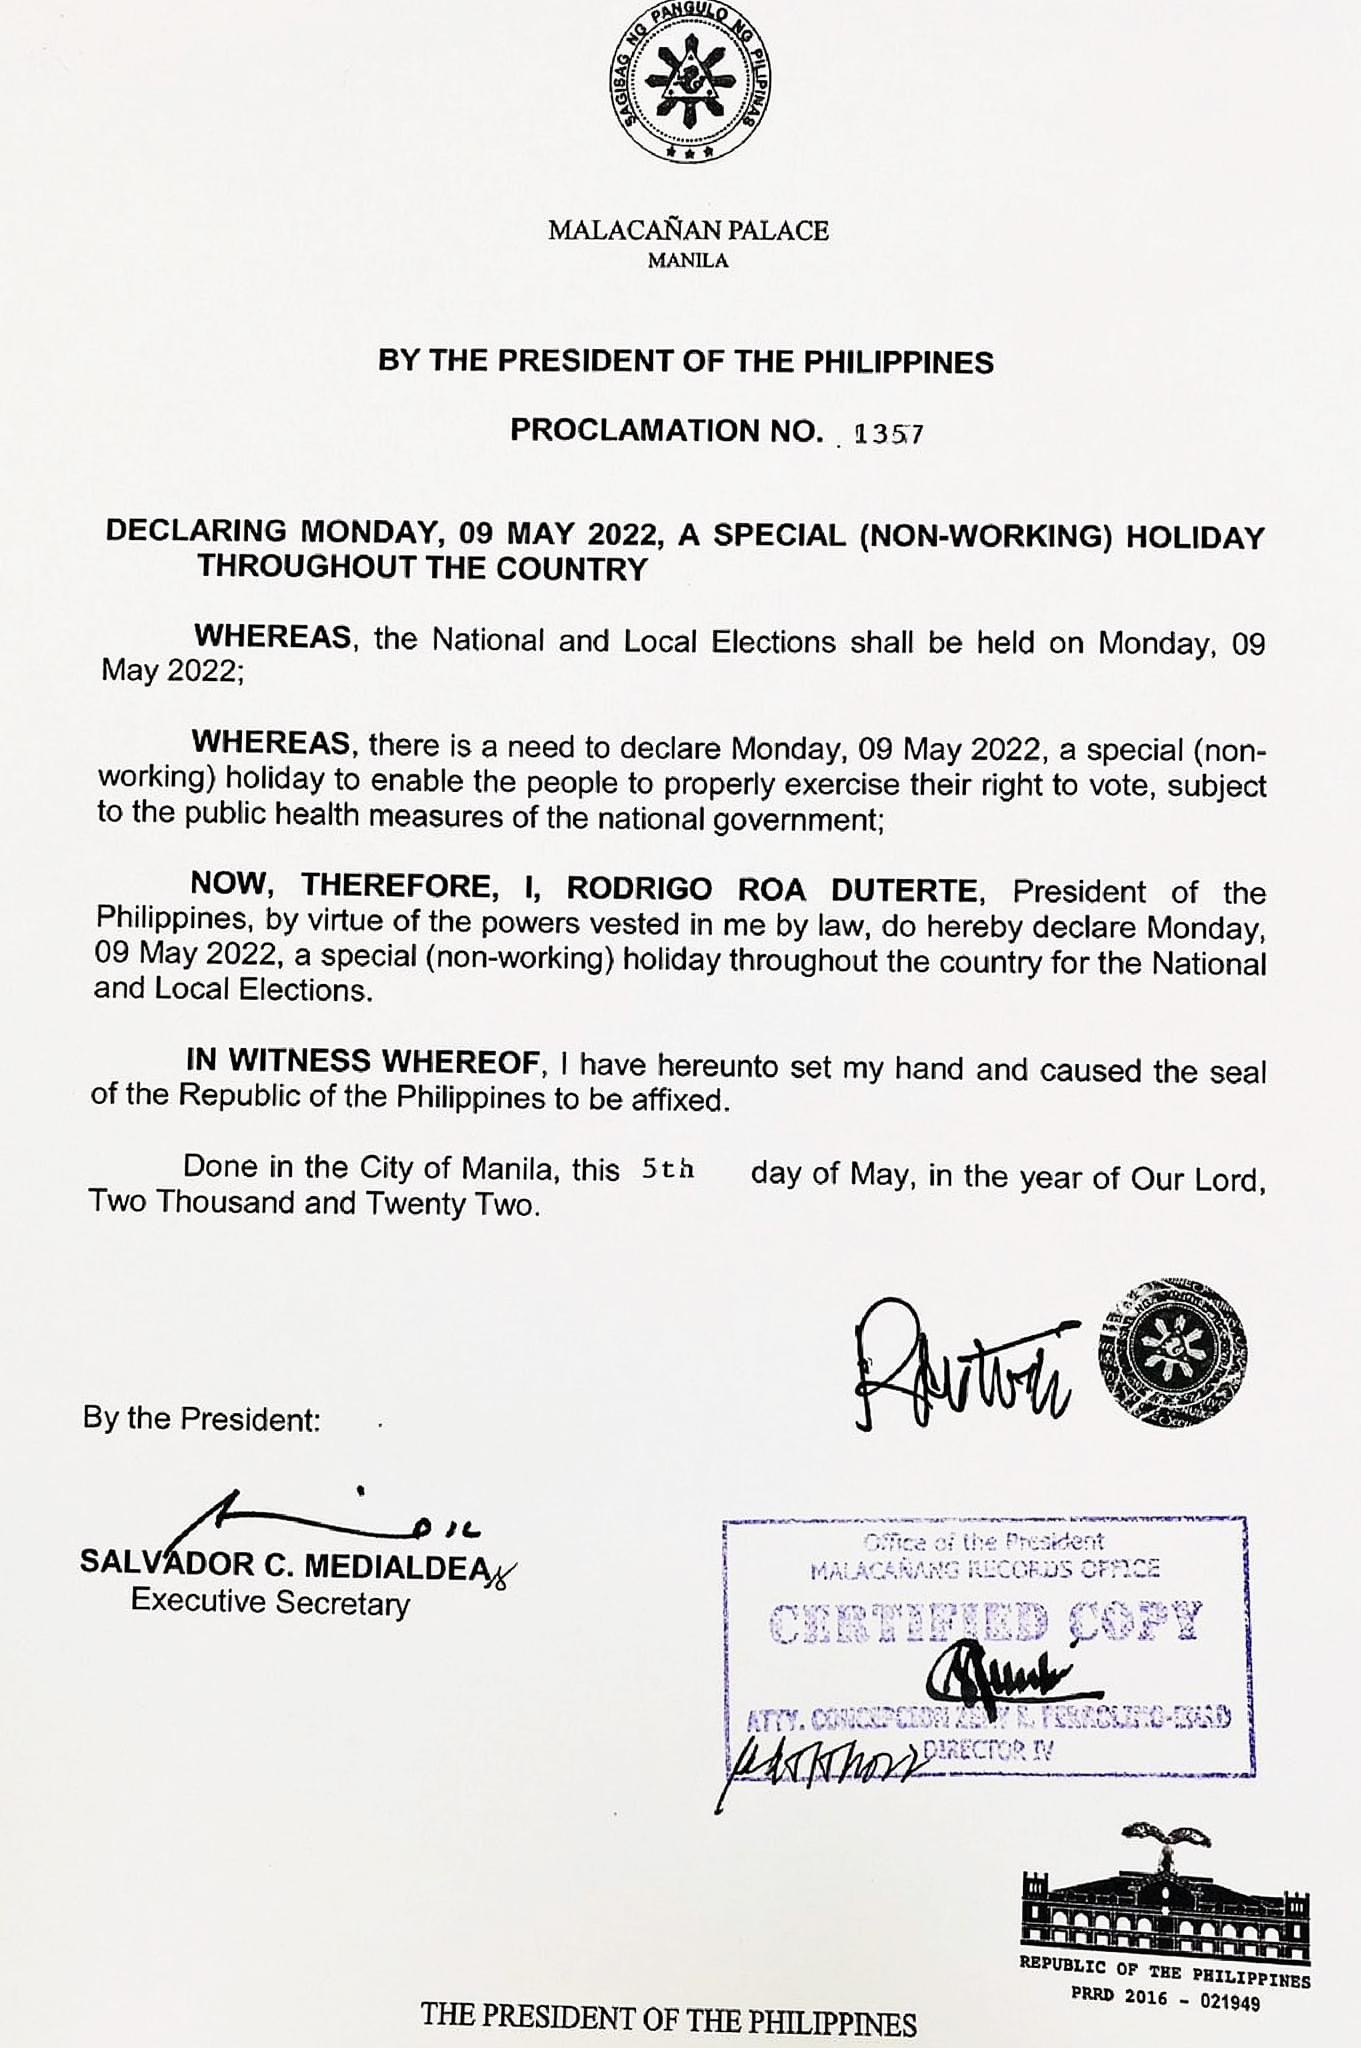 President proclamation No. 1357